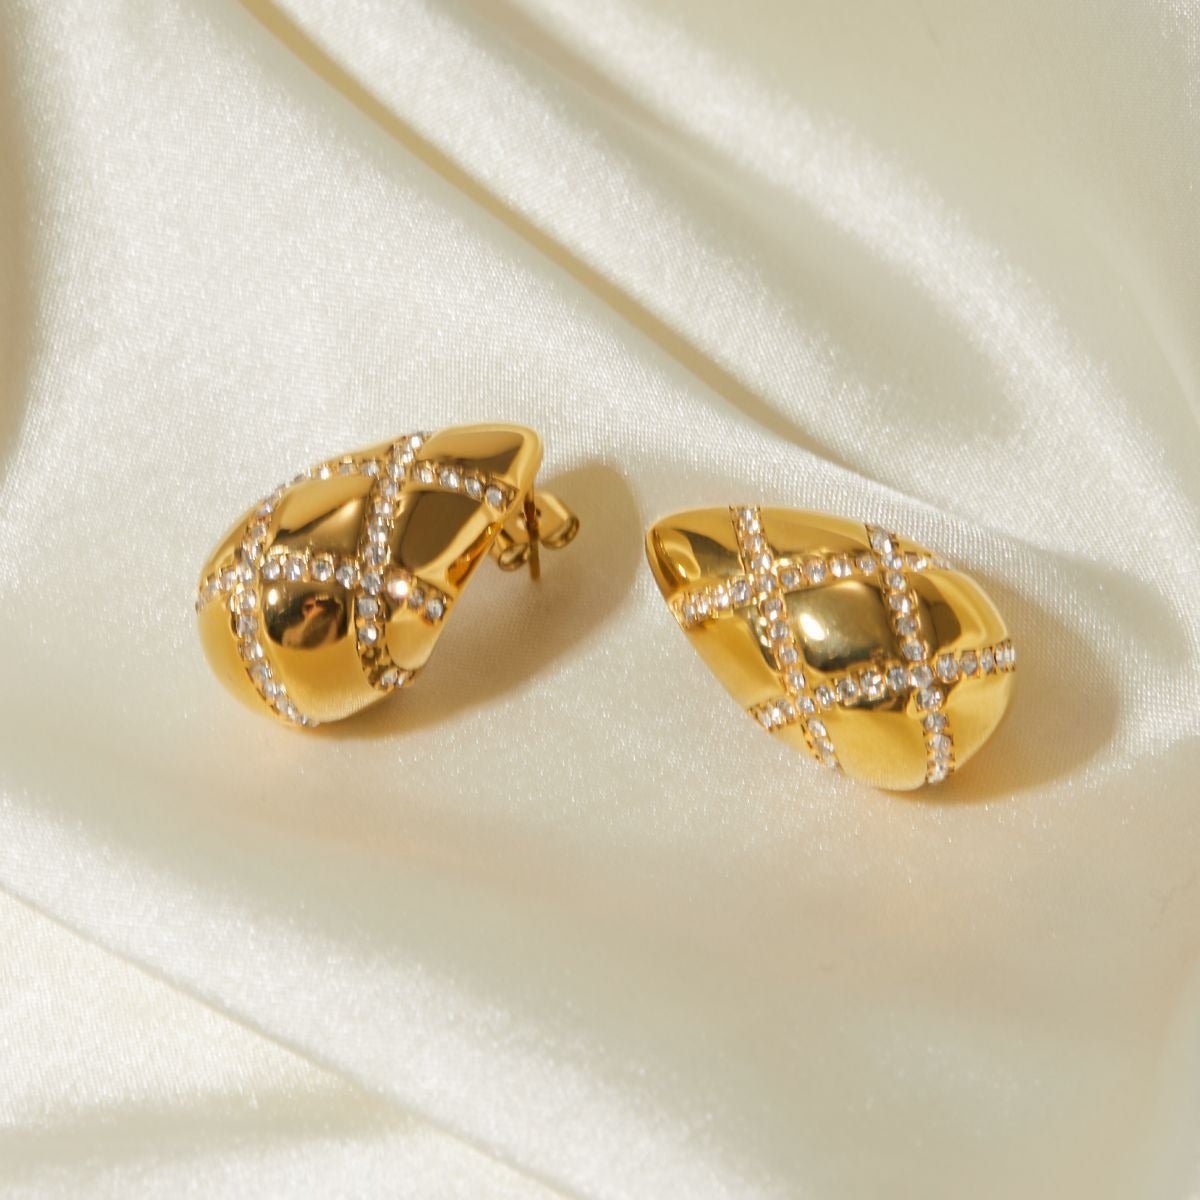 18k fashionable drop-shaped earrings with rhombus-set diamond design - JuVons